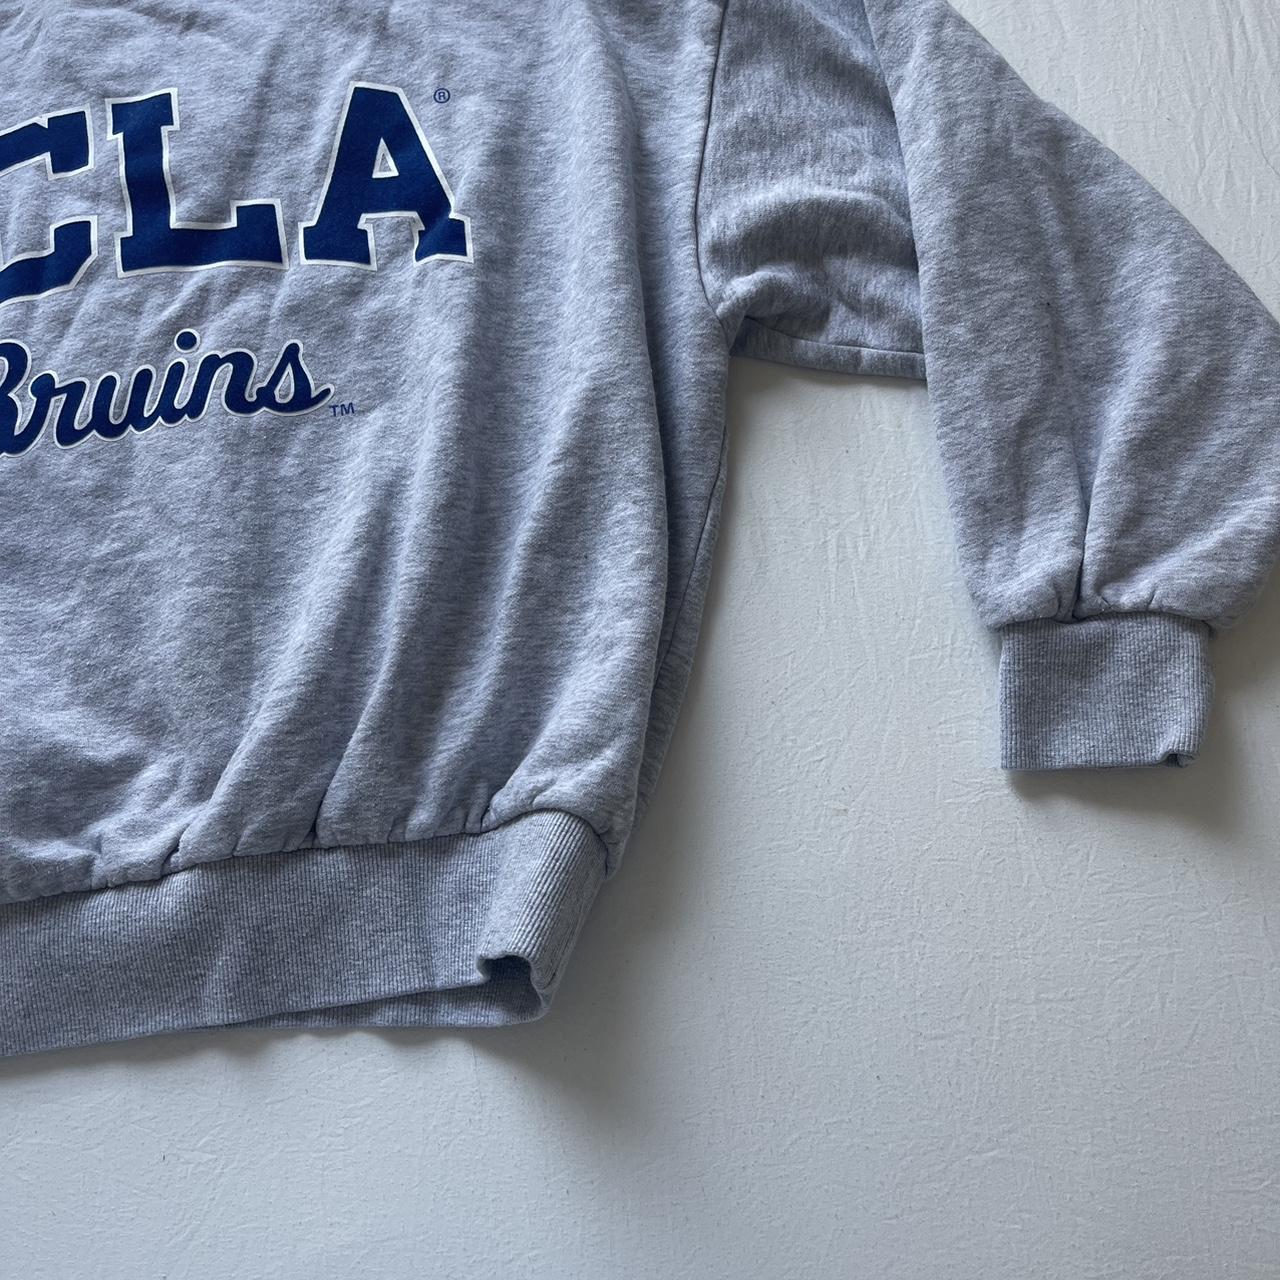 UCLA Bruins NCAA College Crest H&M White Sweater Sweatshirt  Women's Extra Small